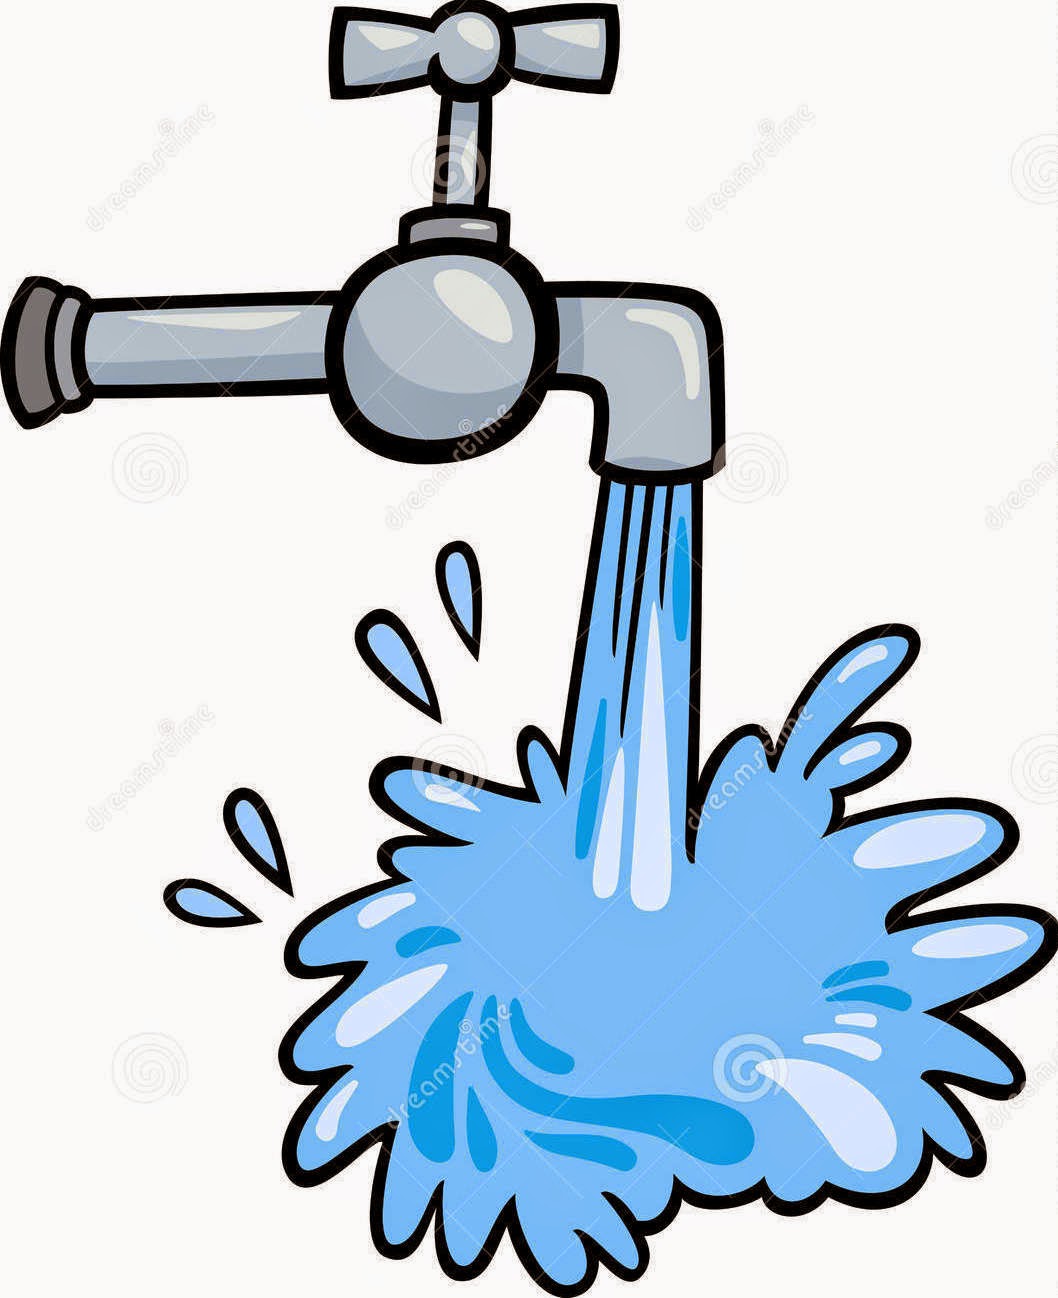 Aquifer Clipart Flowing Water Clipart Water Tap Clip Art Cartoon